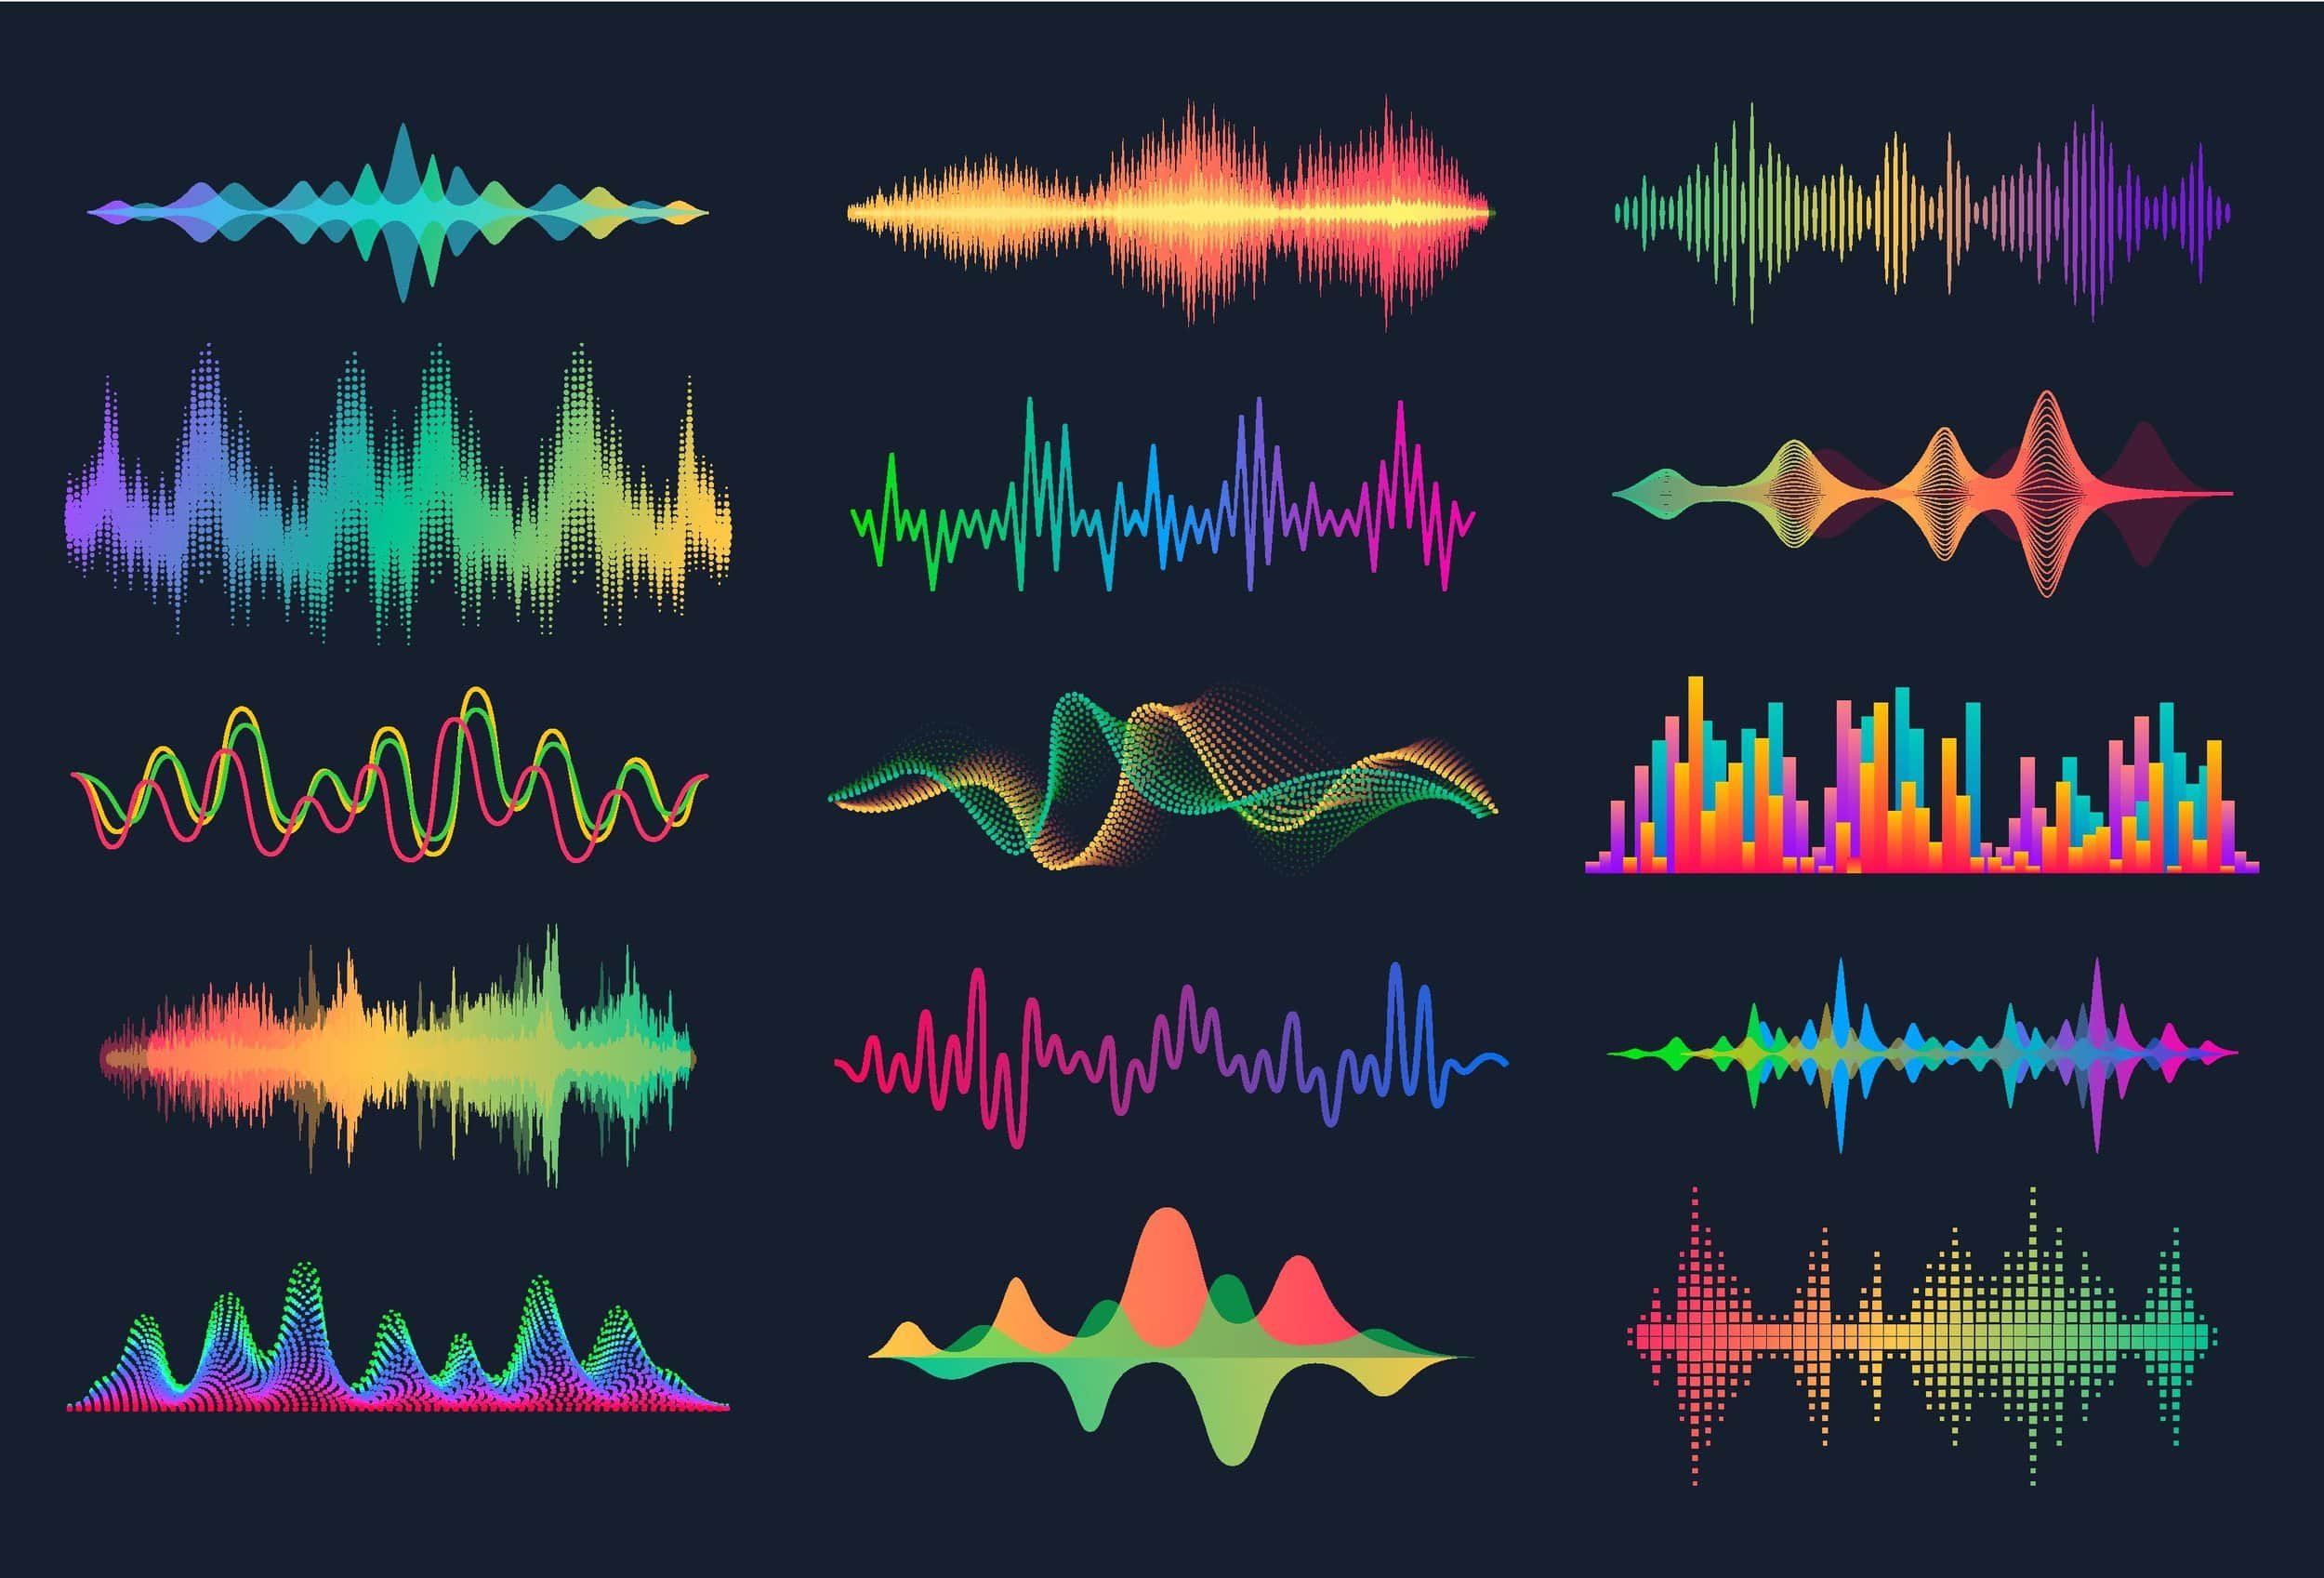 Audio Frequencies Explained